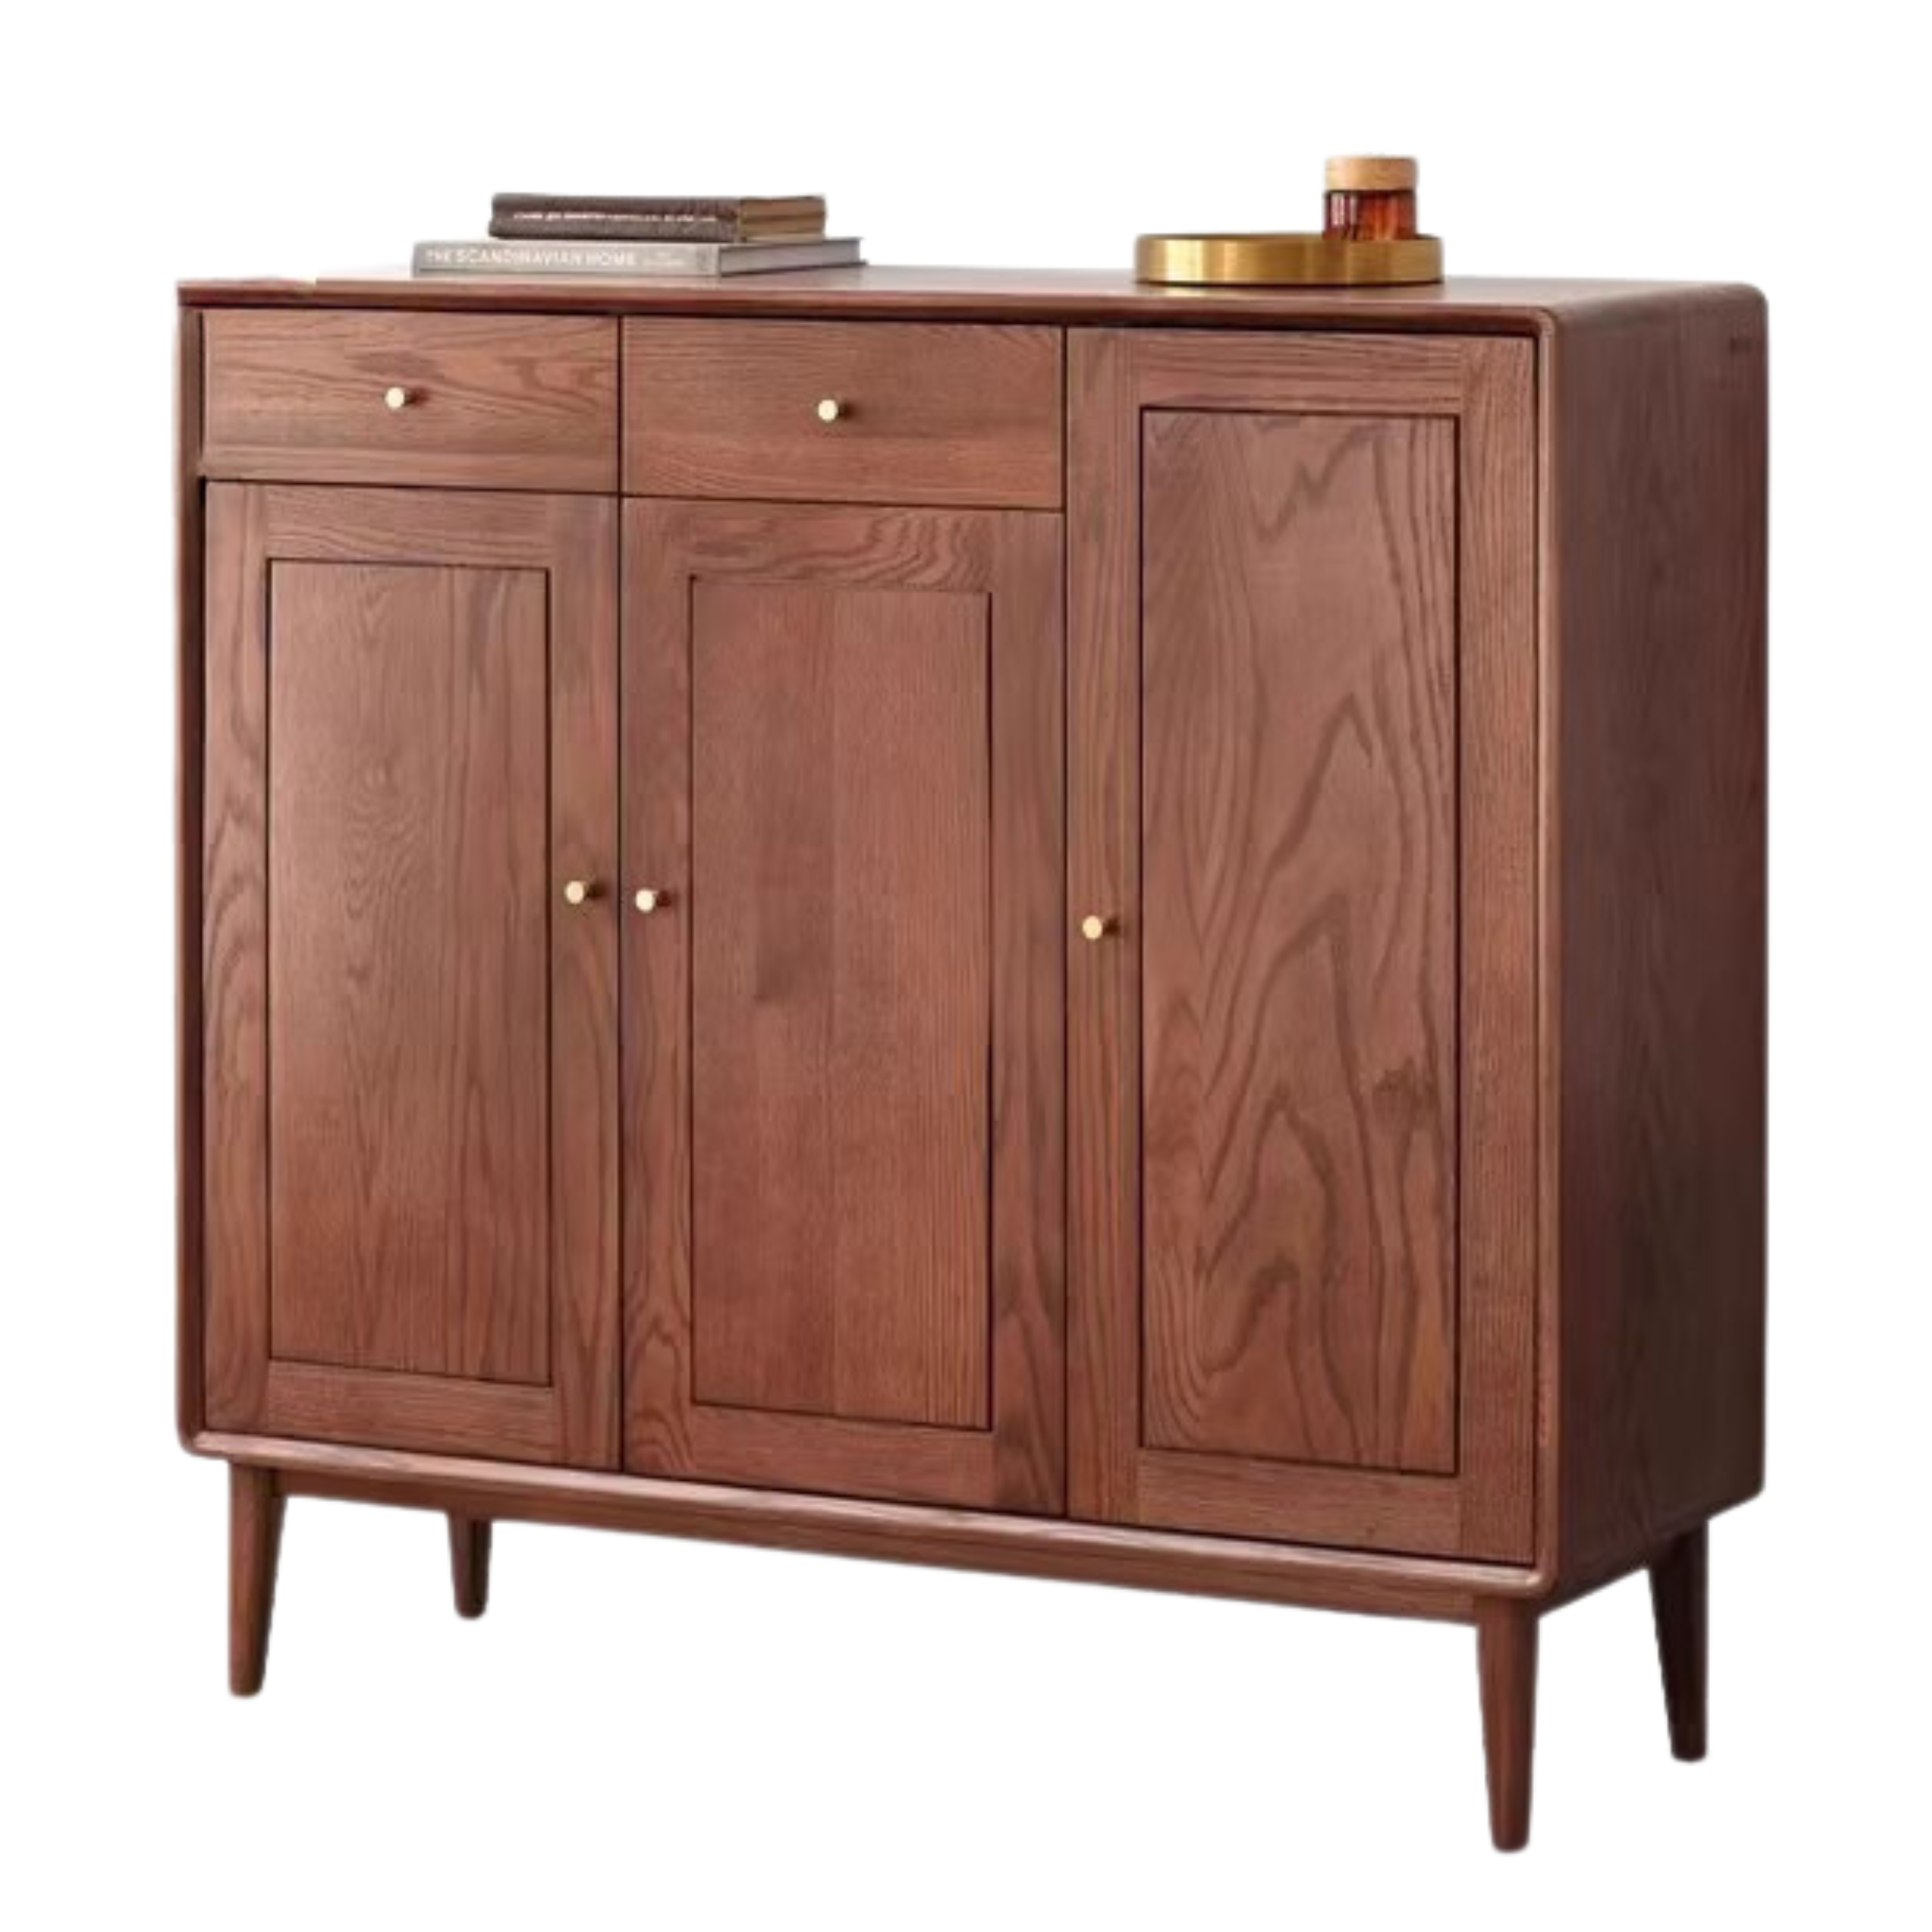 Oak solid wood shoe cabinet, entrance cabinet: